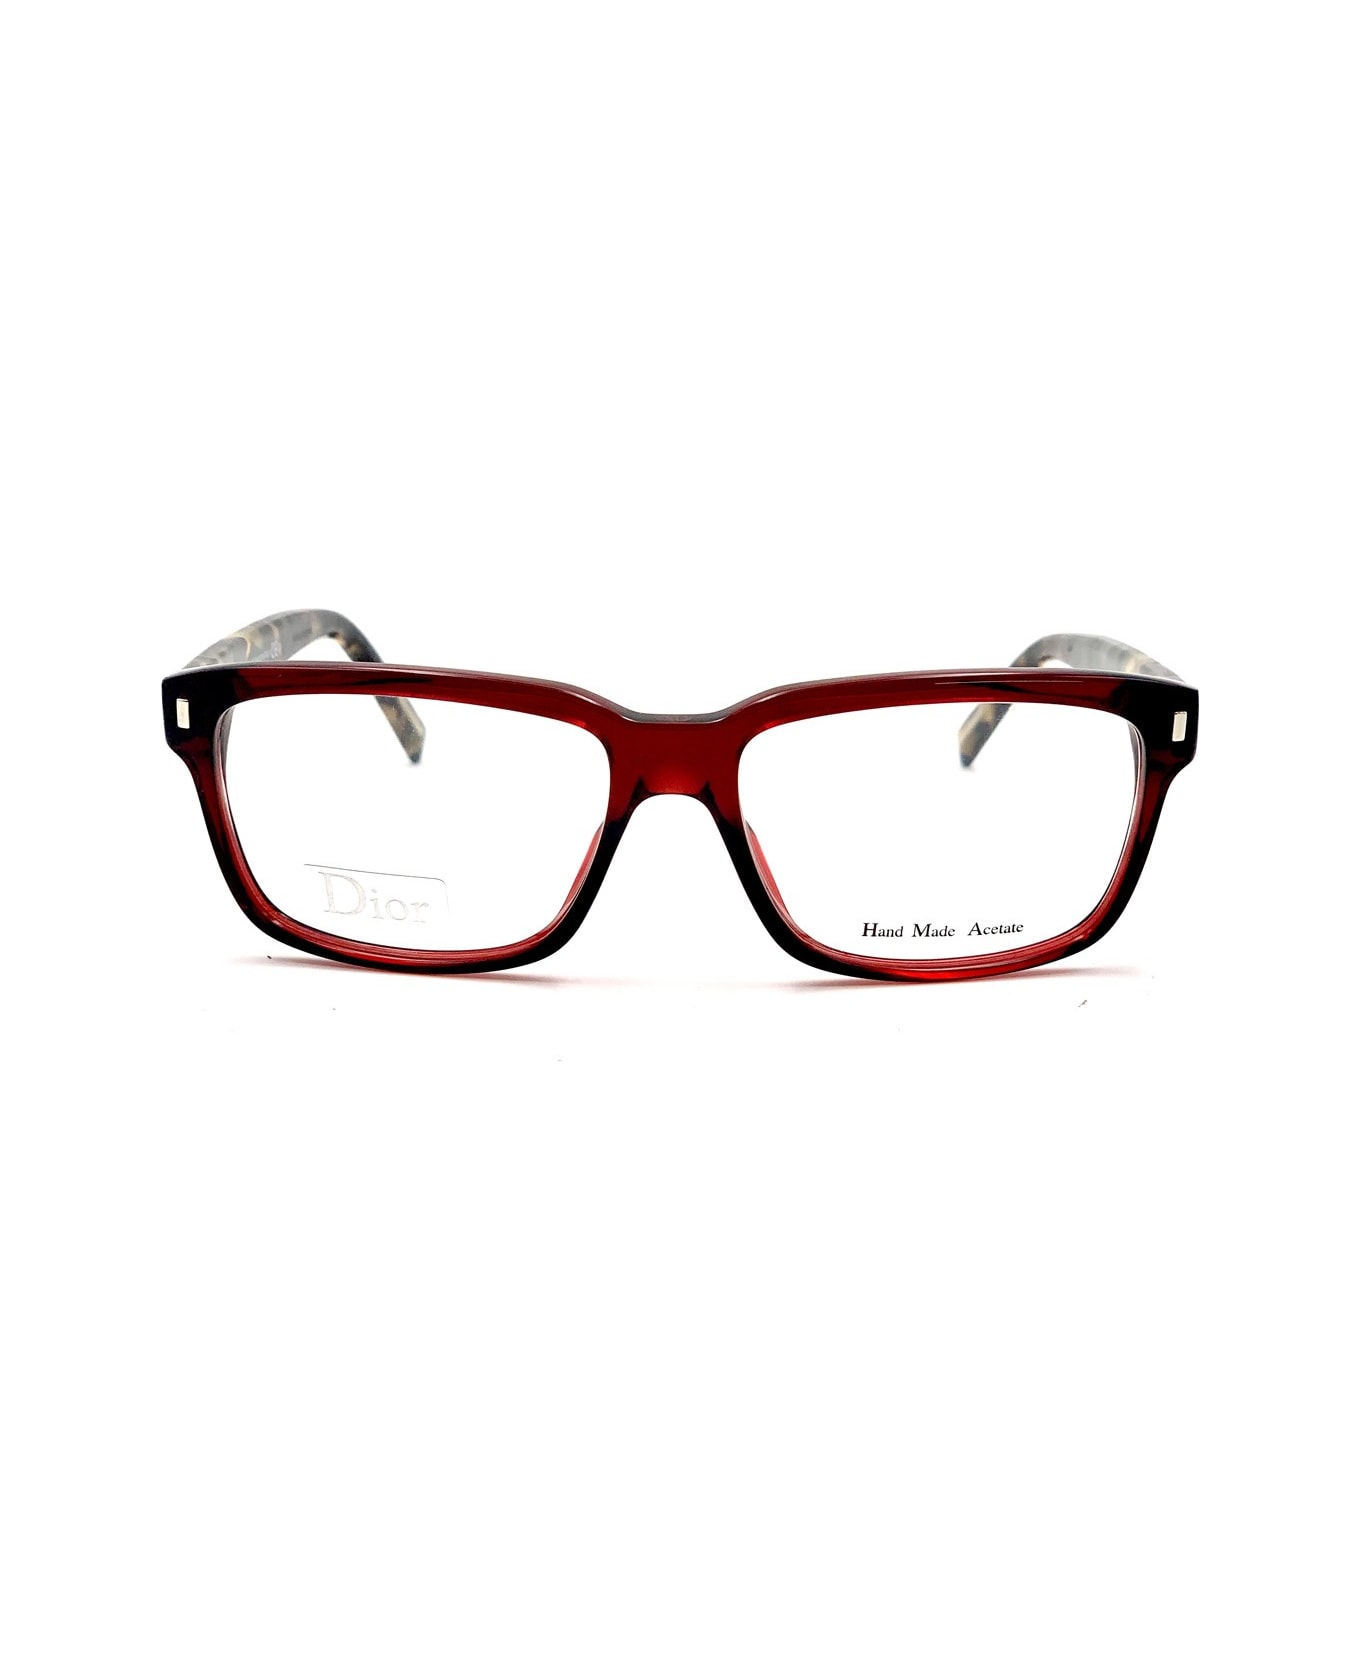 Dior Eyewear Blacktie159 Glasses - Rosso